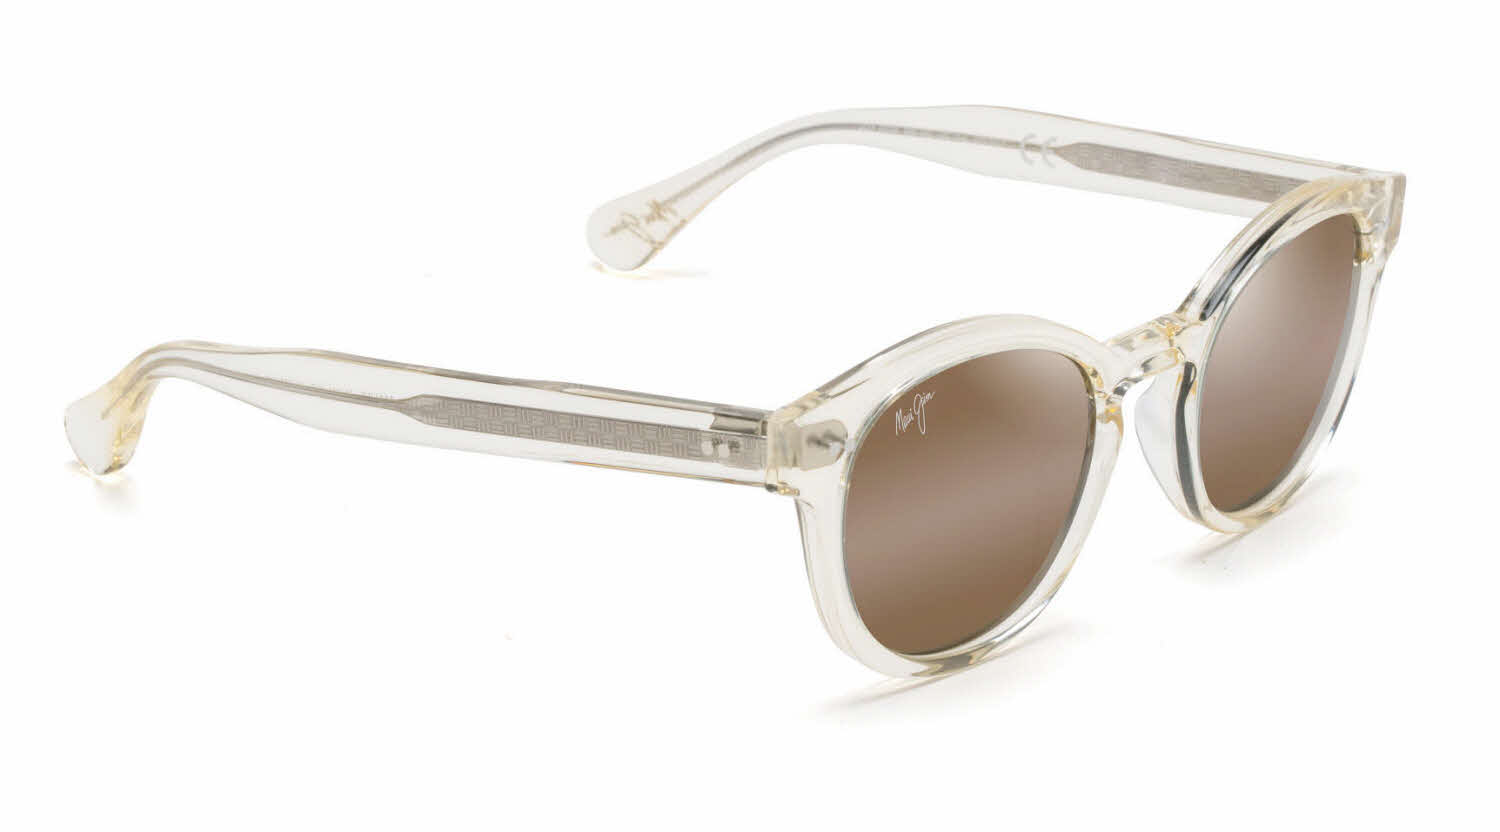 Maui Jim Joy Ride-841 Sunglasses